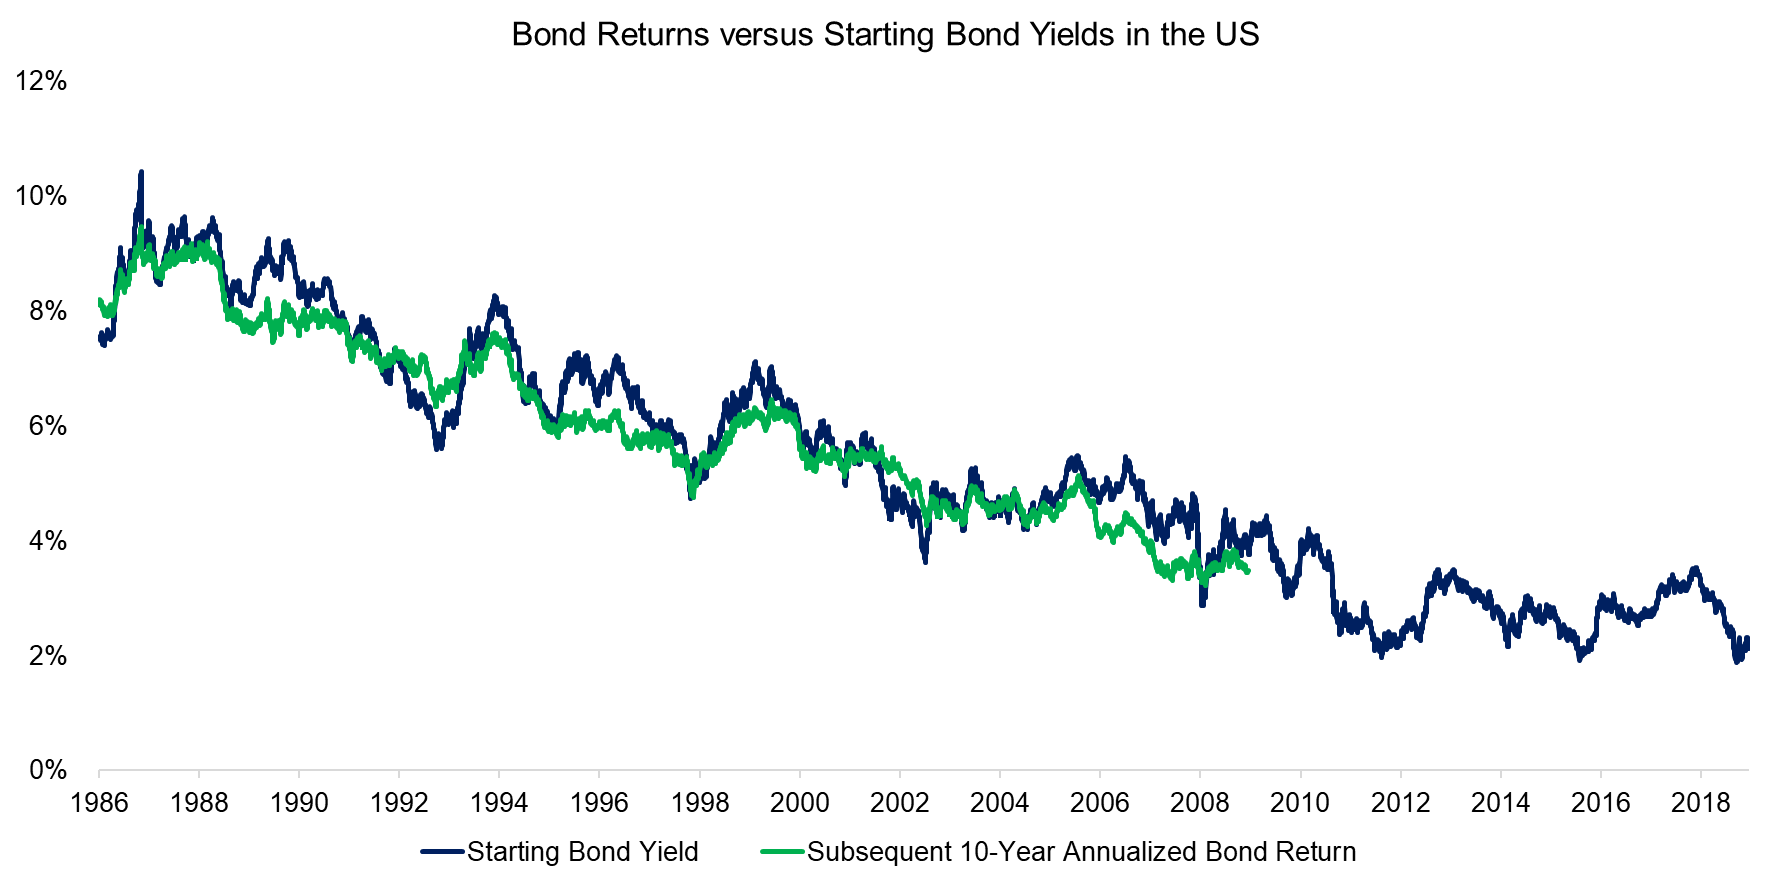 Bond Returns versus Starting Bond Yields in the US